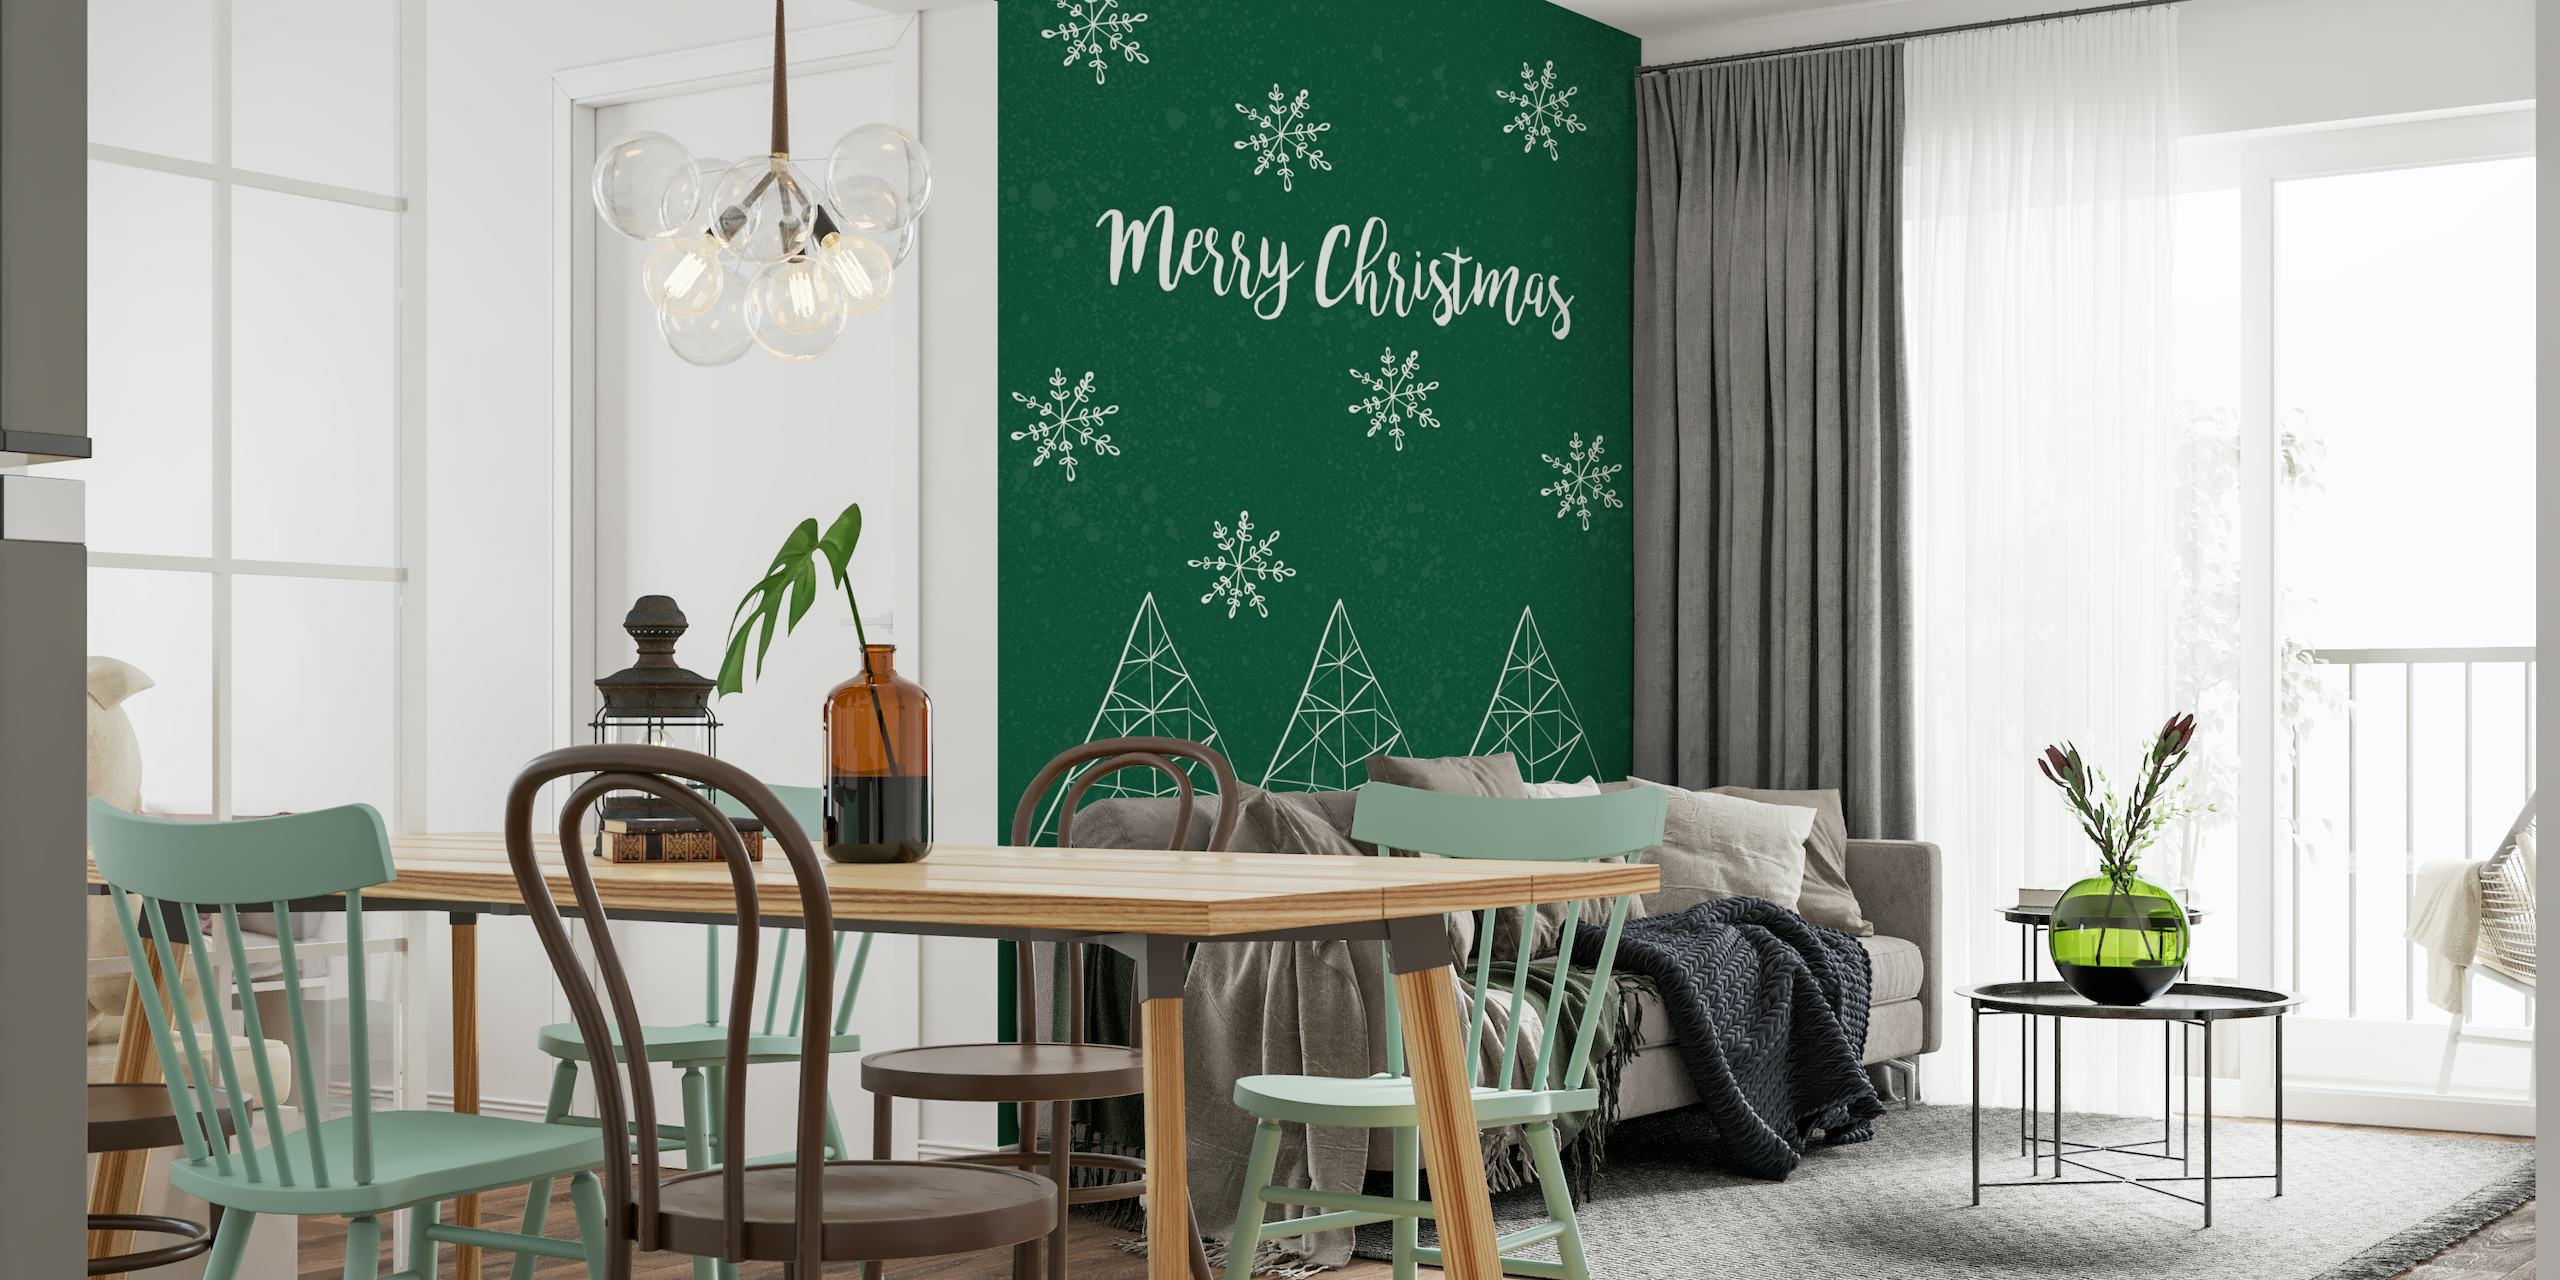 Merry Christmas Green behang